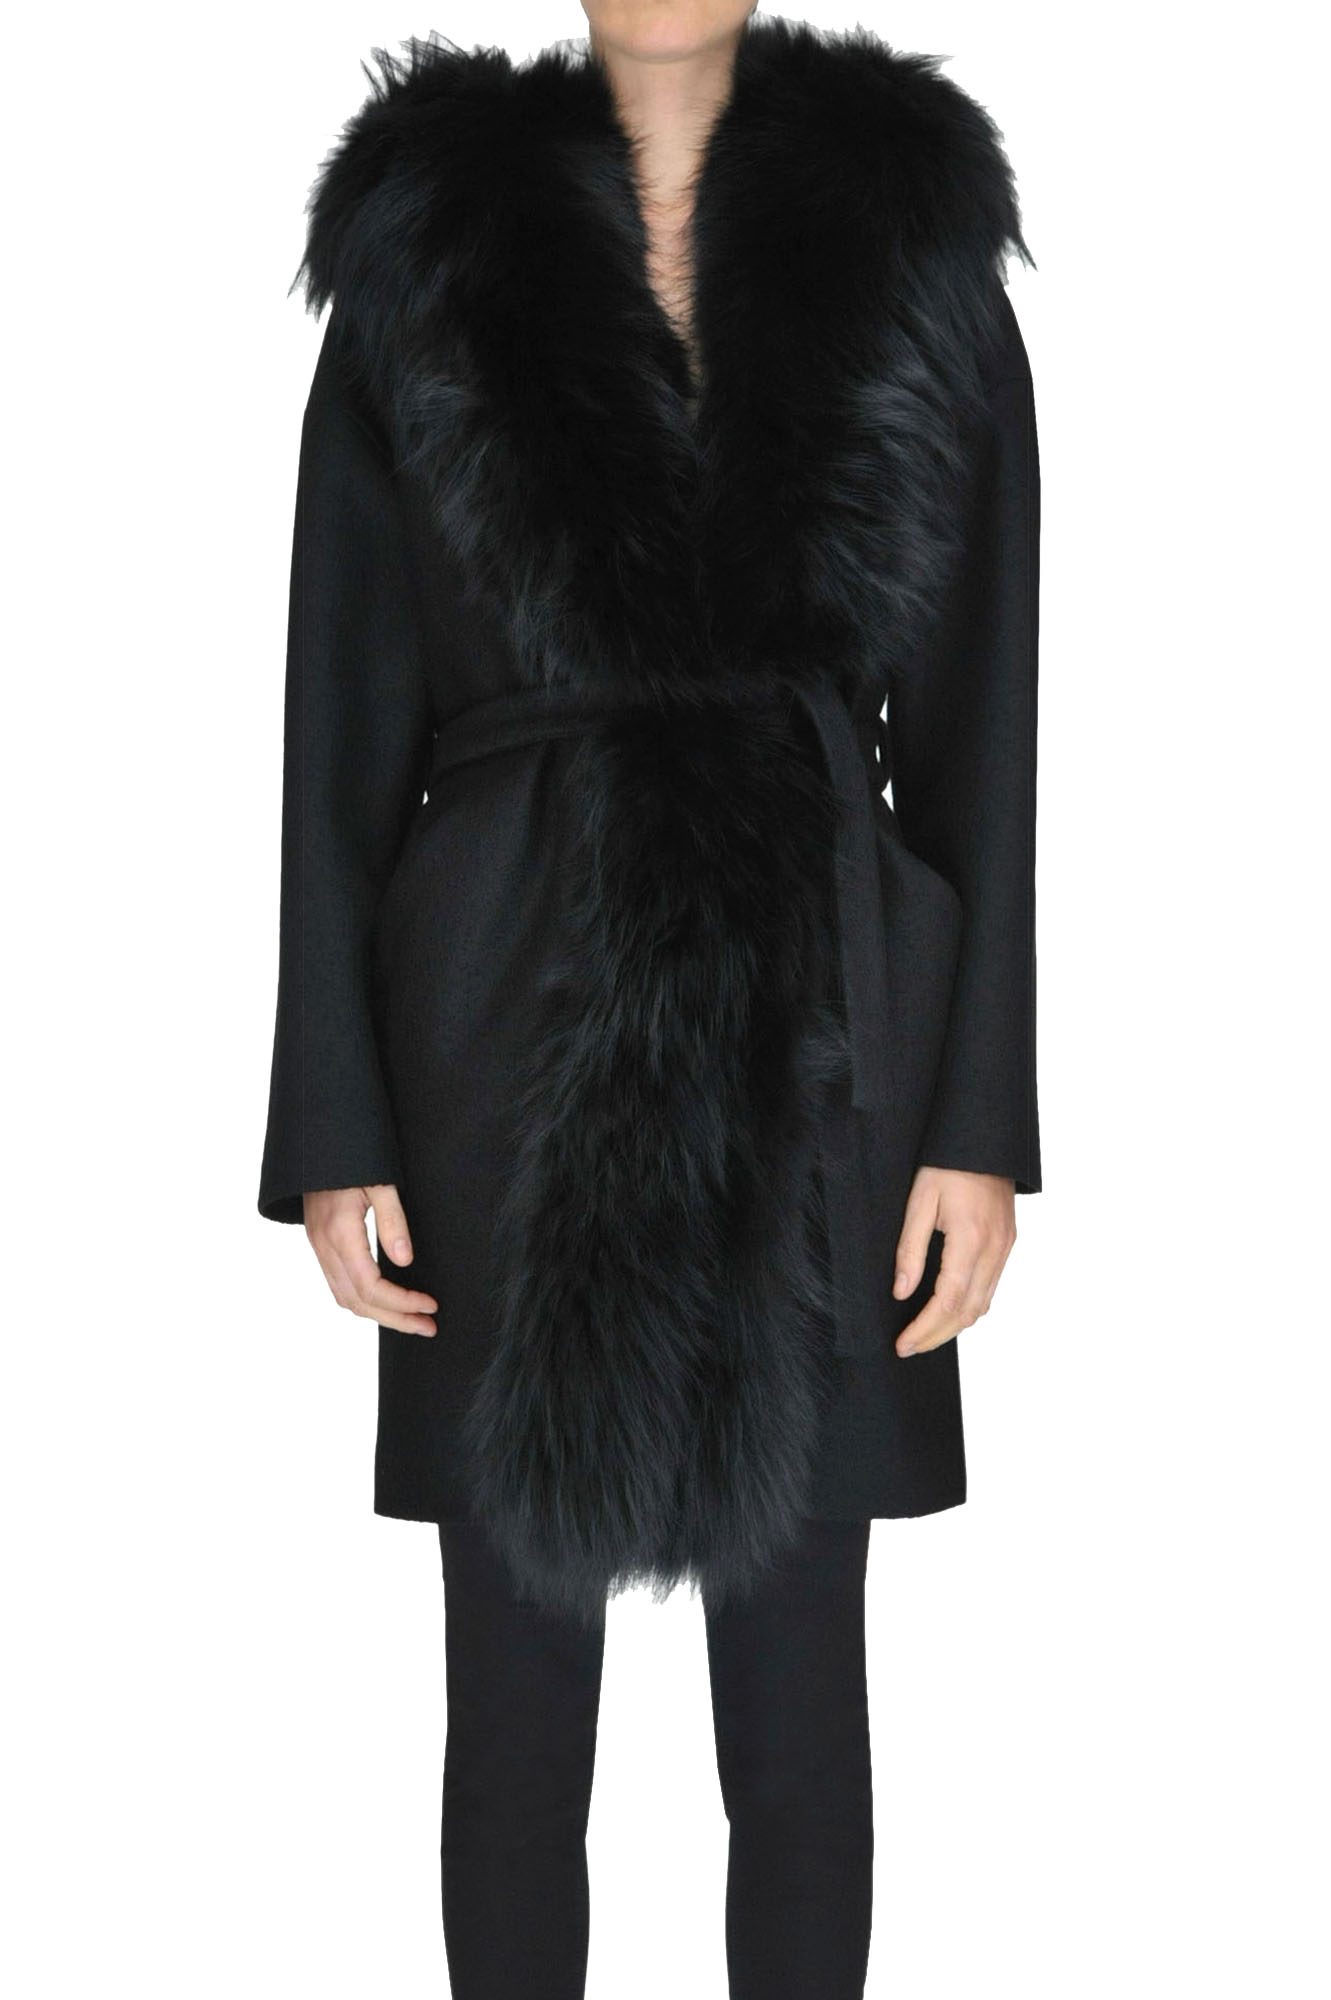 Ava Adore California Robe Coat In Black | ModeSens